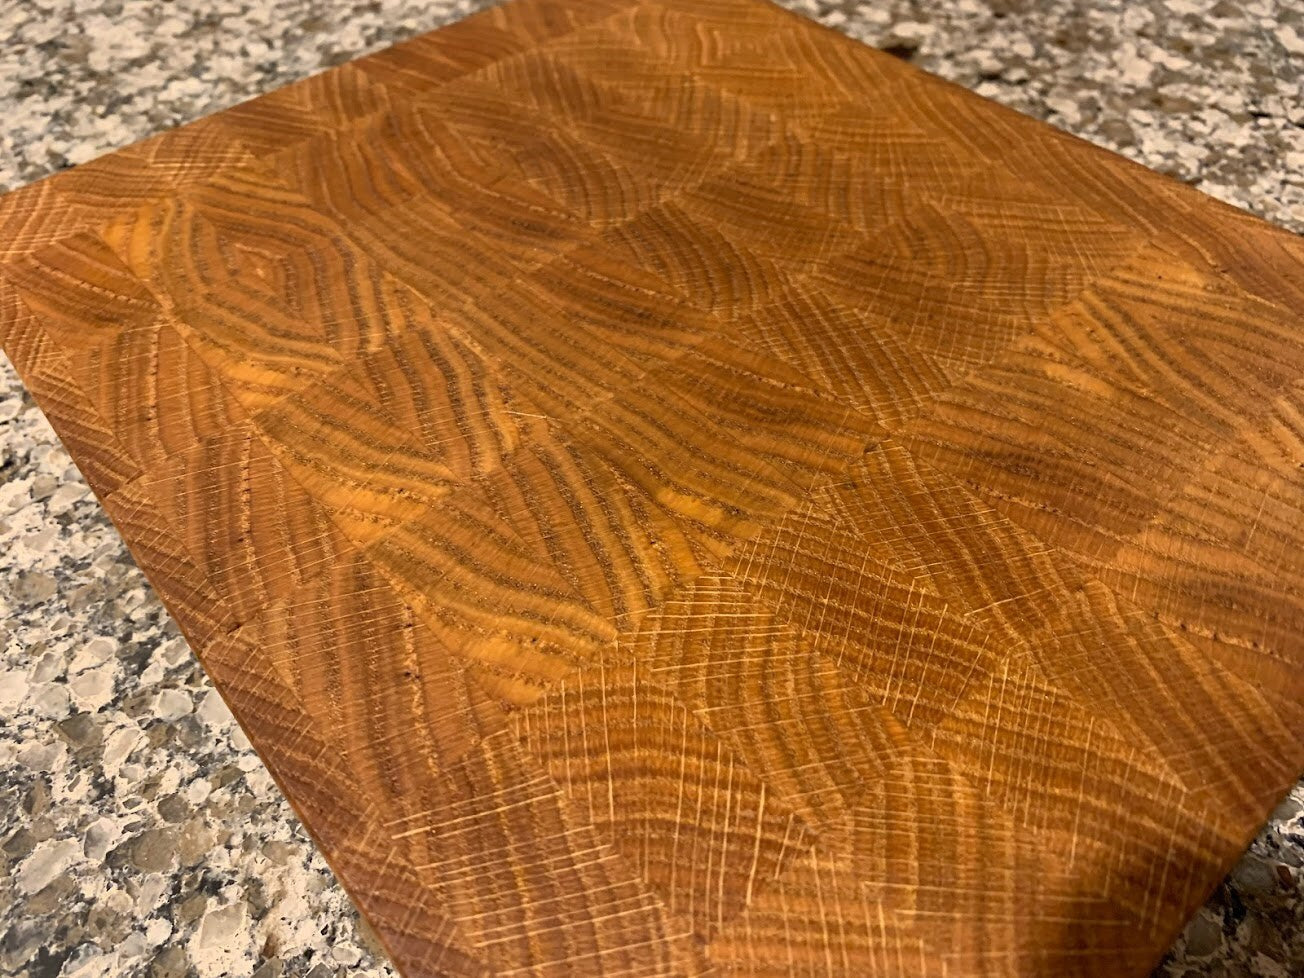 Oak Cutting Board End Grain Butcher Block - Large Wooden Cutting Board for Kitchen, Handmade from oak hard wood